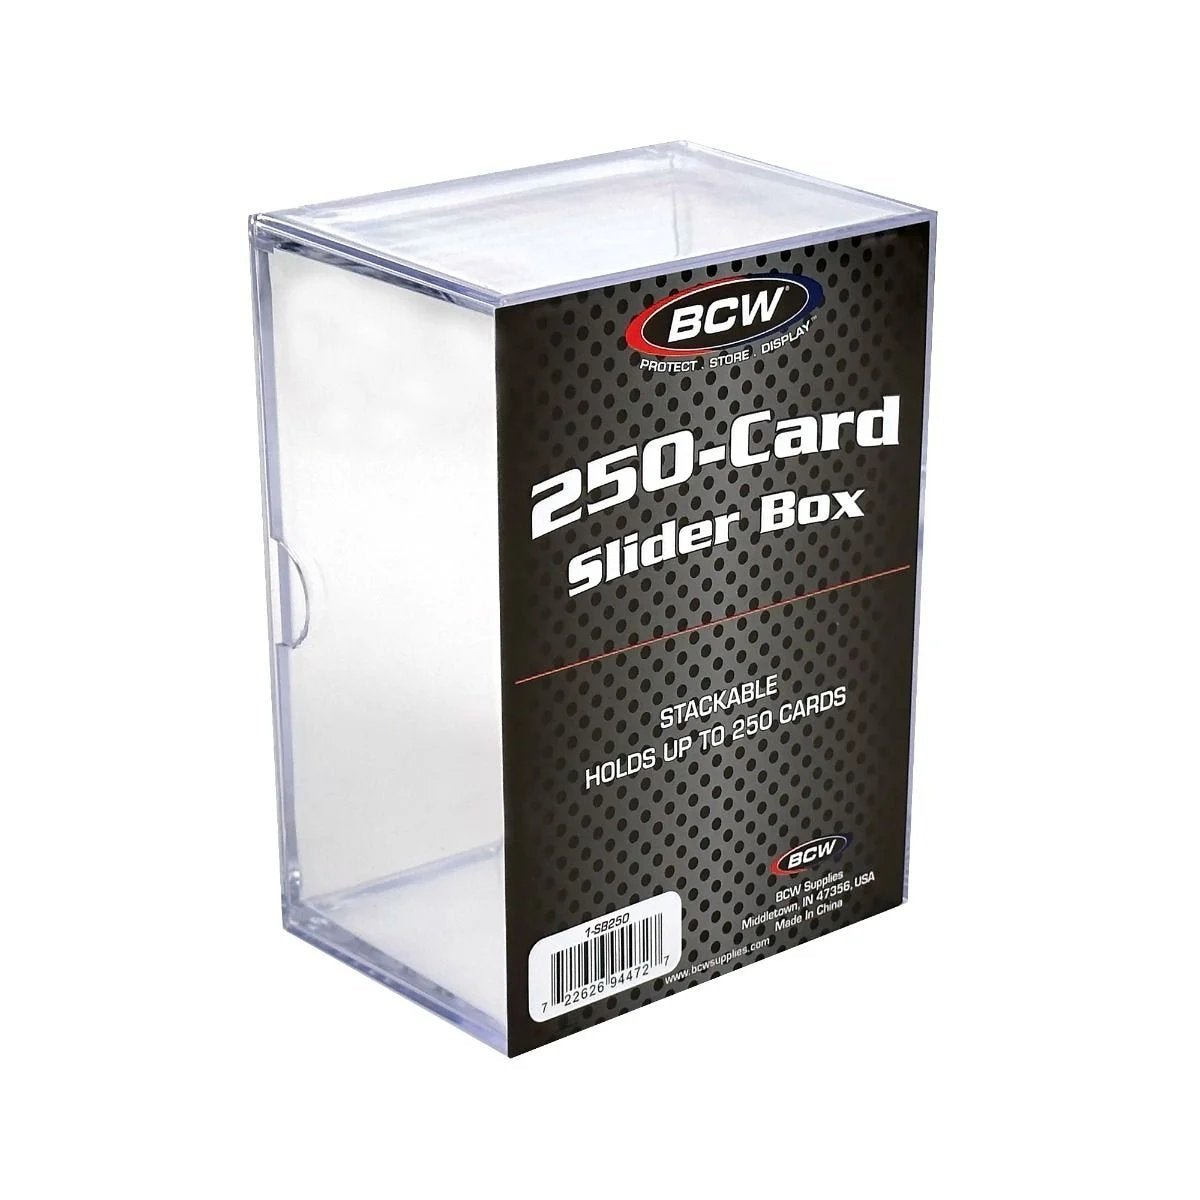 BCW 2 - Piece Slider Box (250 kort) - Hobbykort